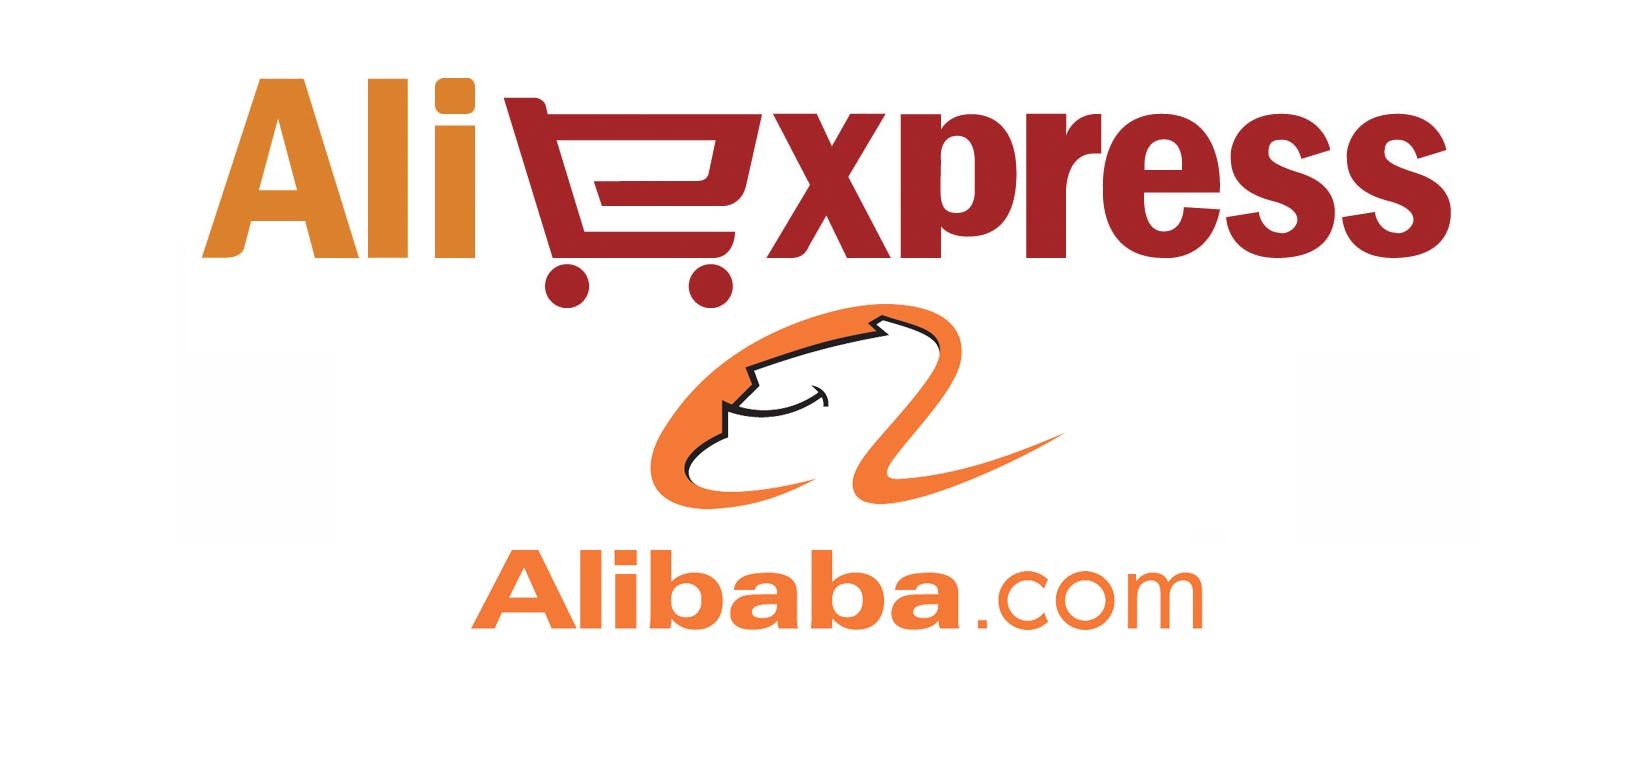 aliexpress part of alibaba